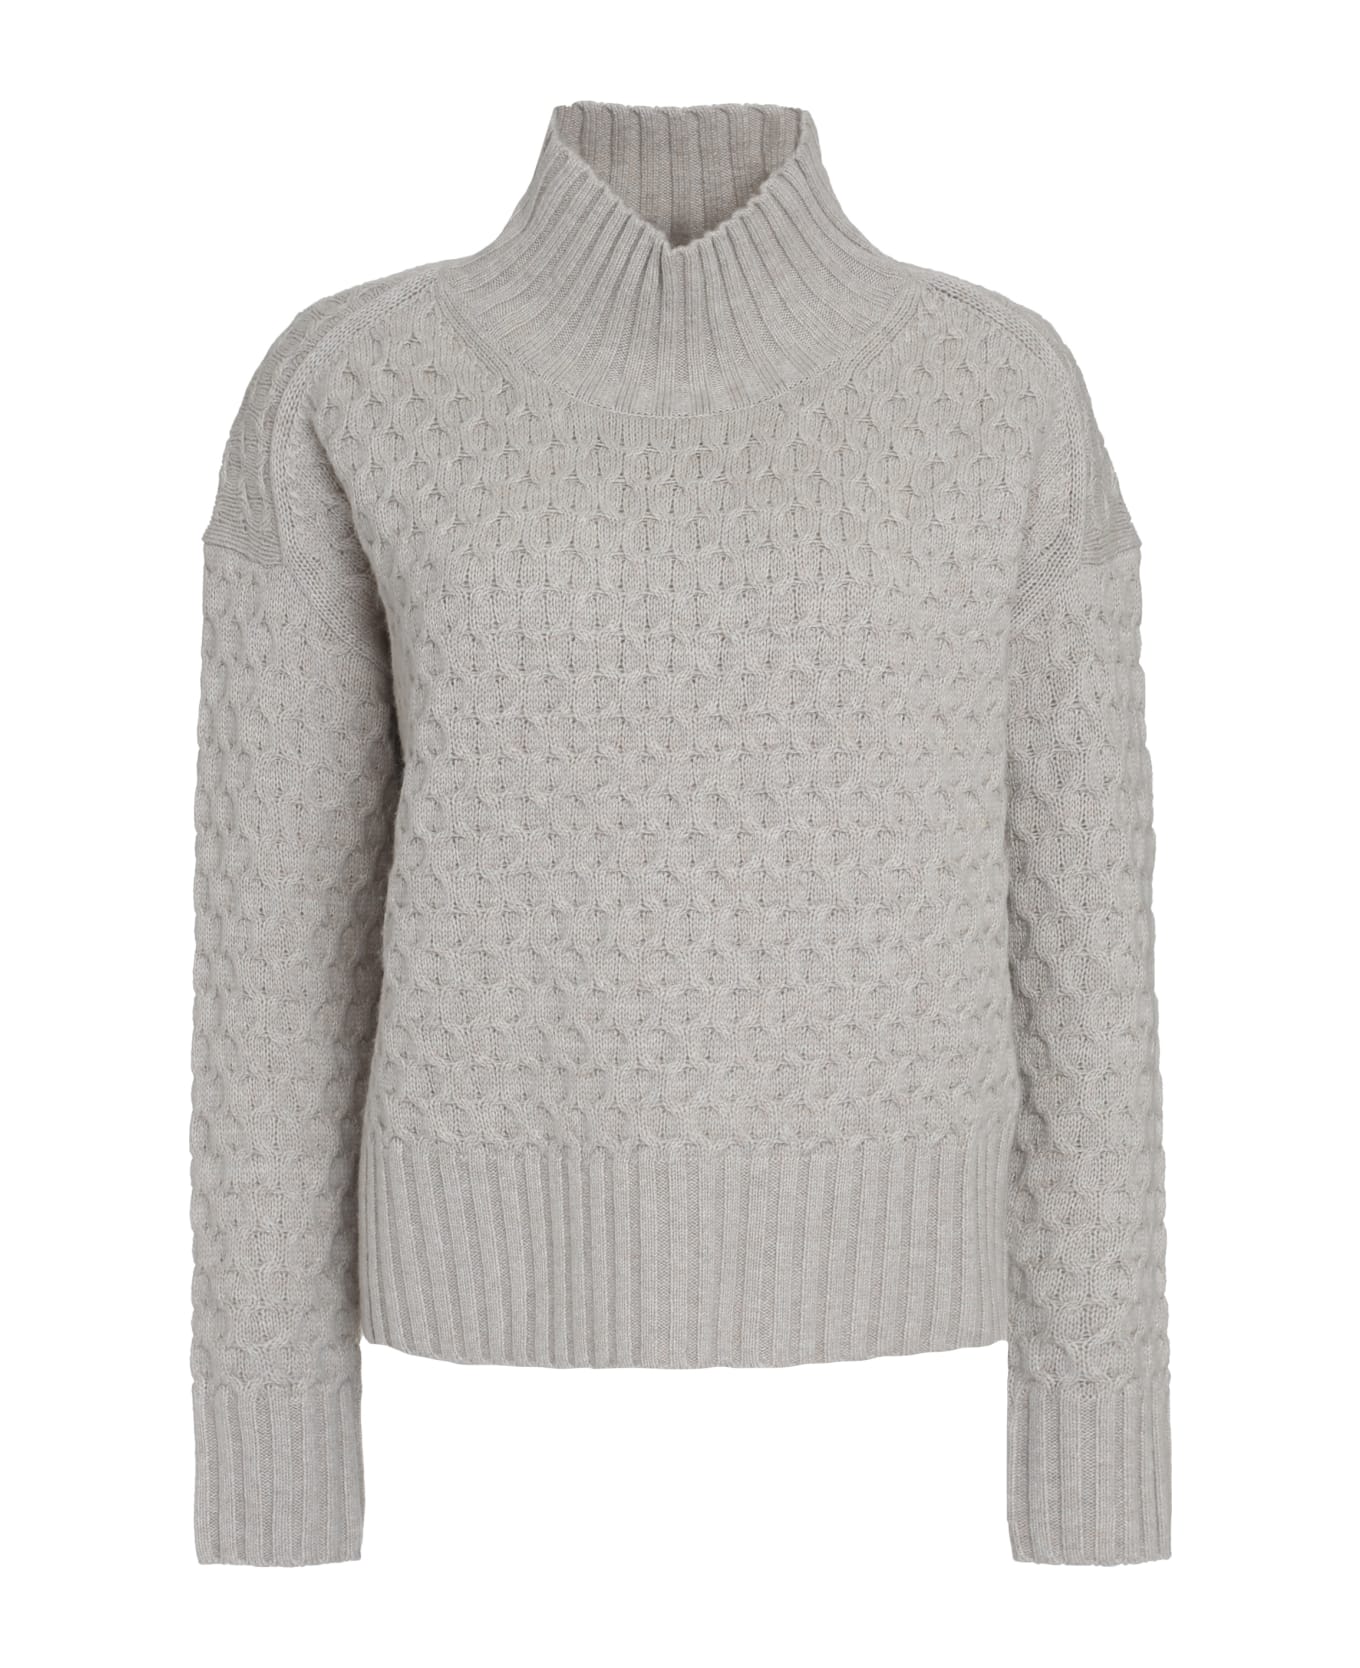 Max Mara Studio Valdese Wool And Cashmere Sweater - Grey